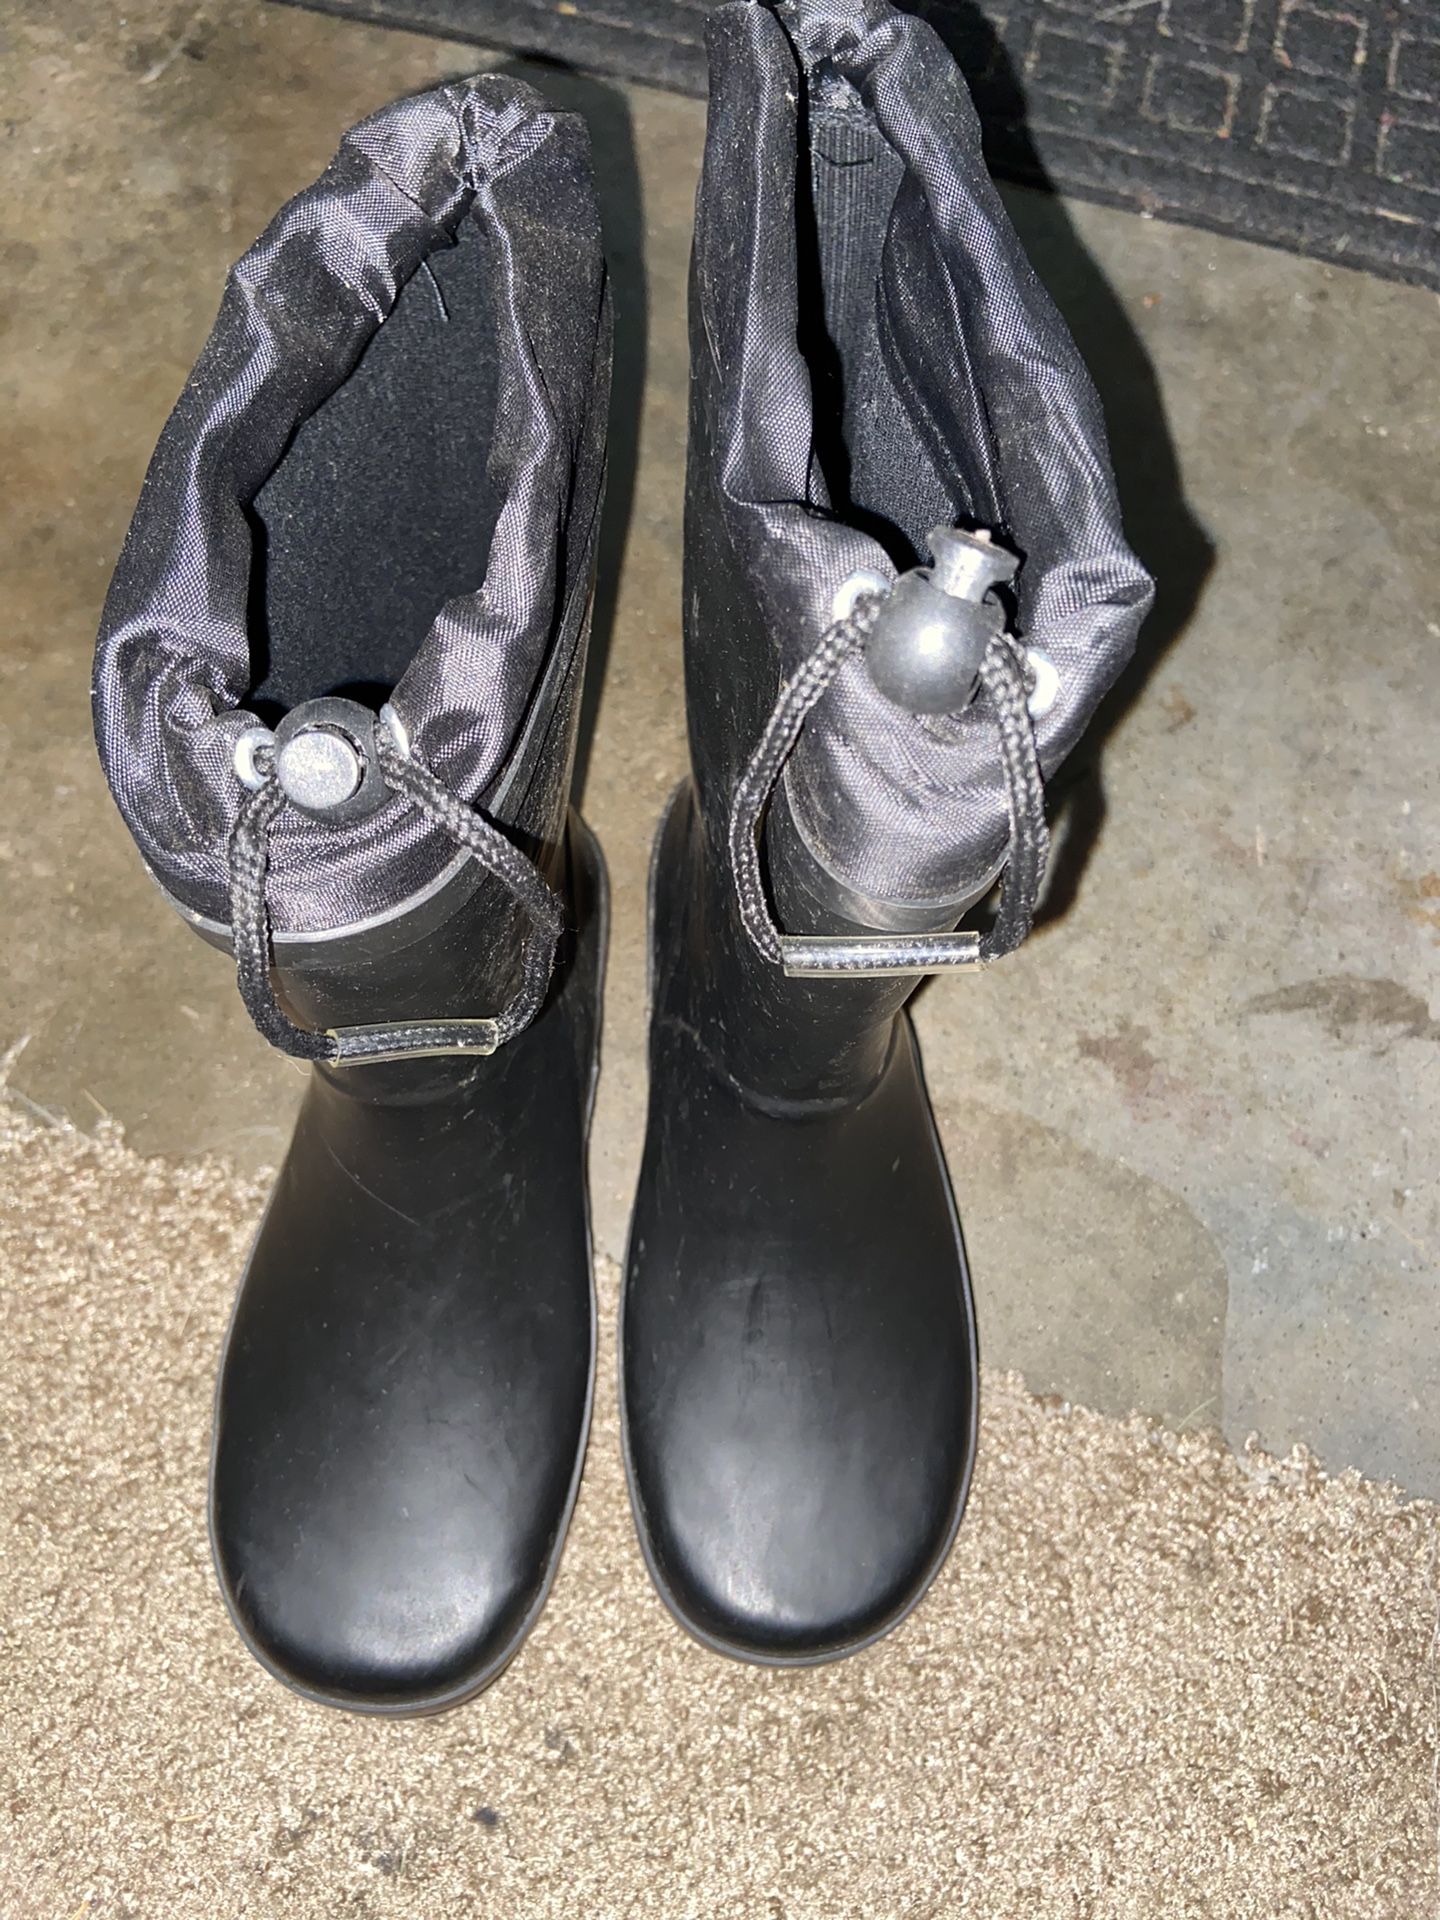 Youth rain boots